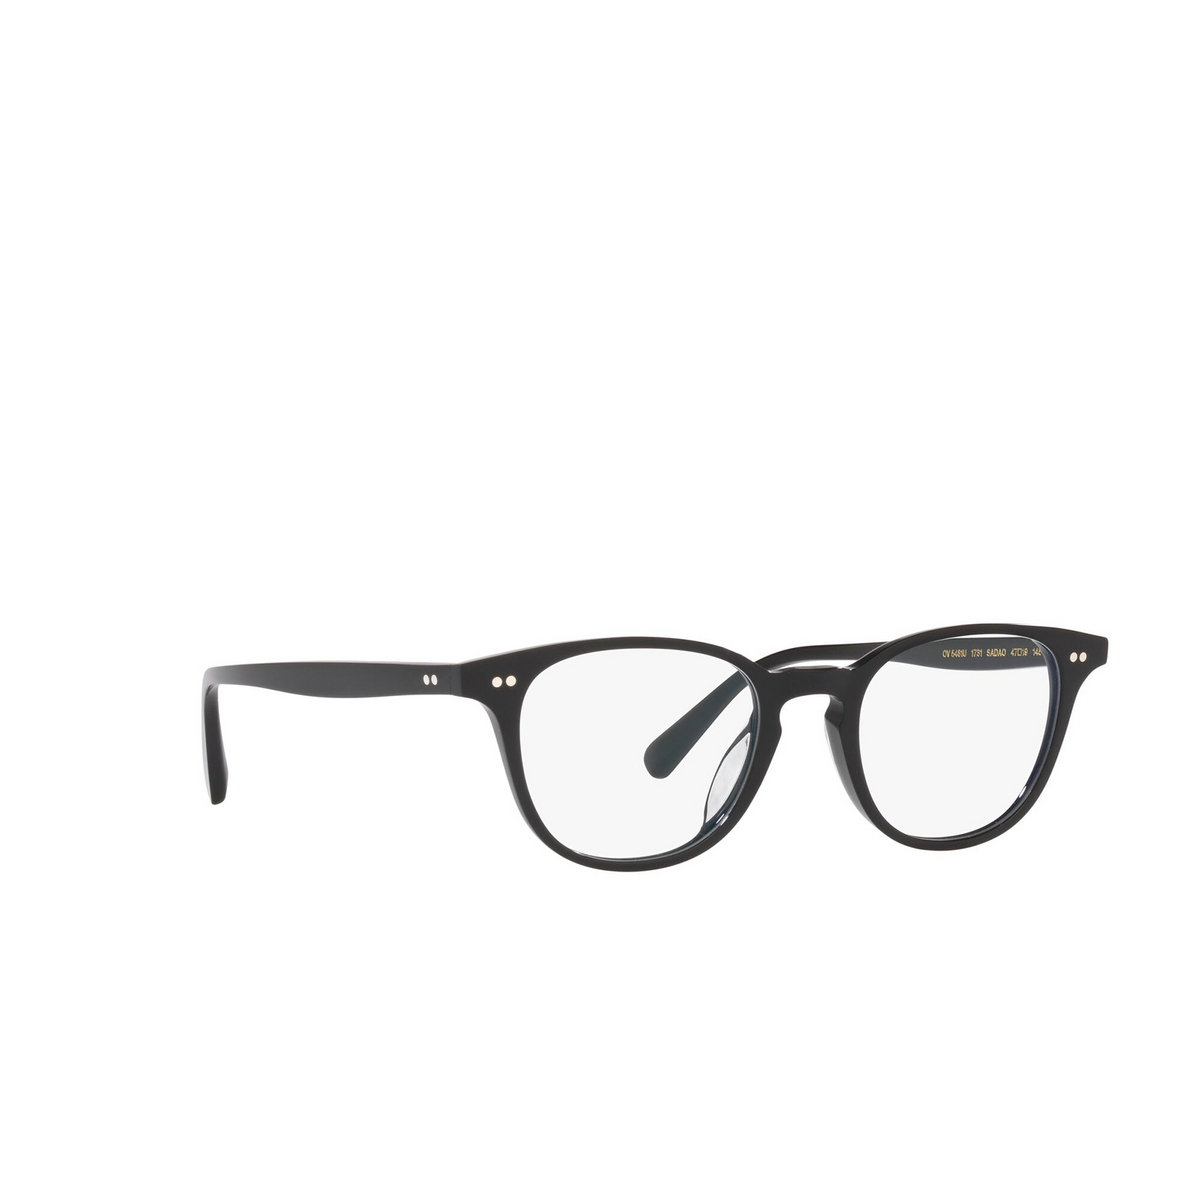 Oliver Peoples® Square Eyeglasses: Sadao OV5481U color Black 1731 - three-quarters view.